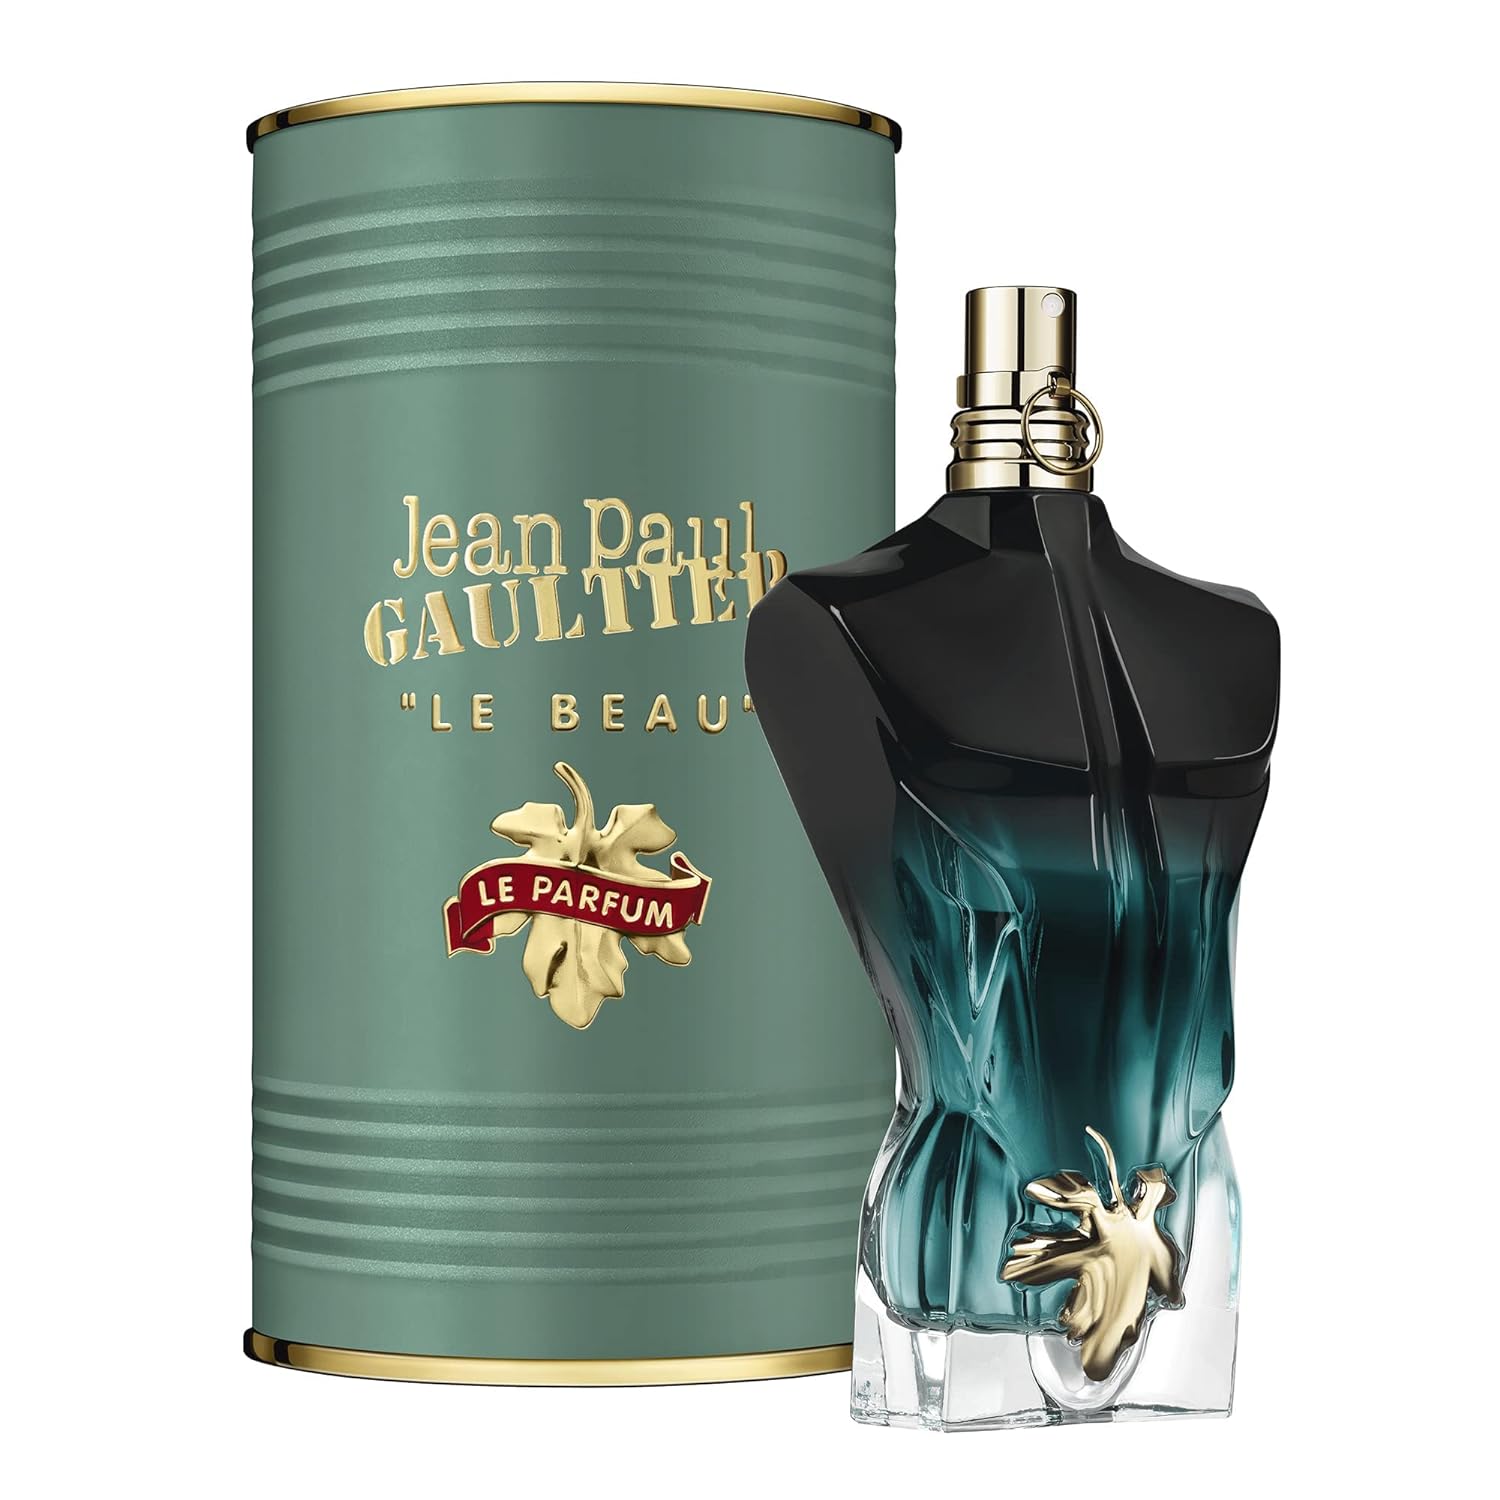 Le Beau Le Parfum by Jean Paul Gaultier 4.2 oz EDP Spray for Men